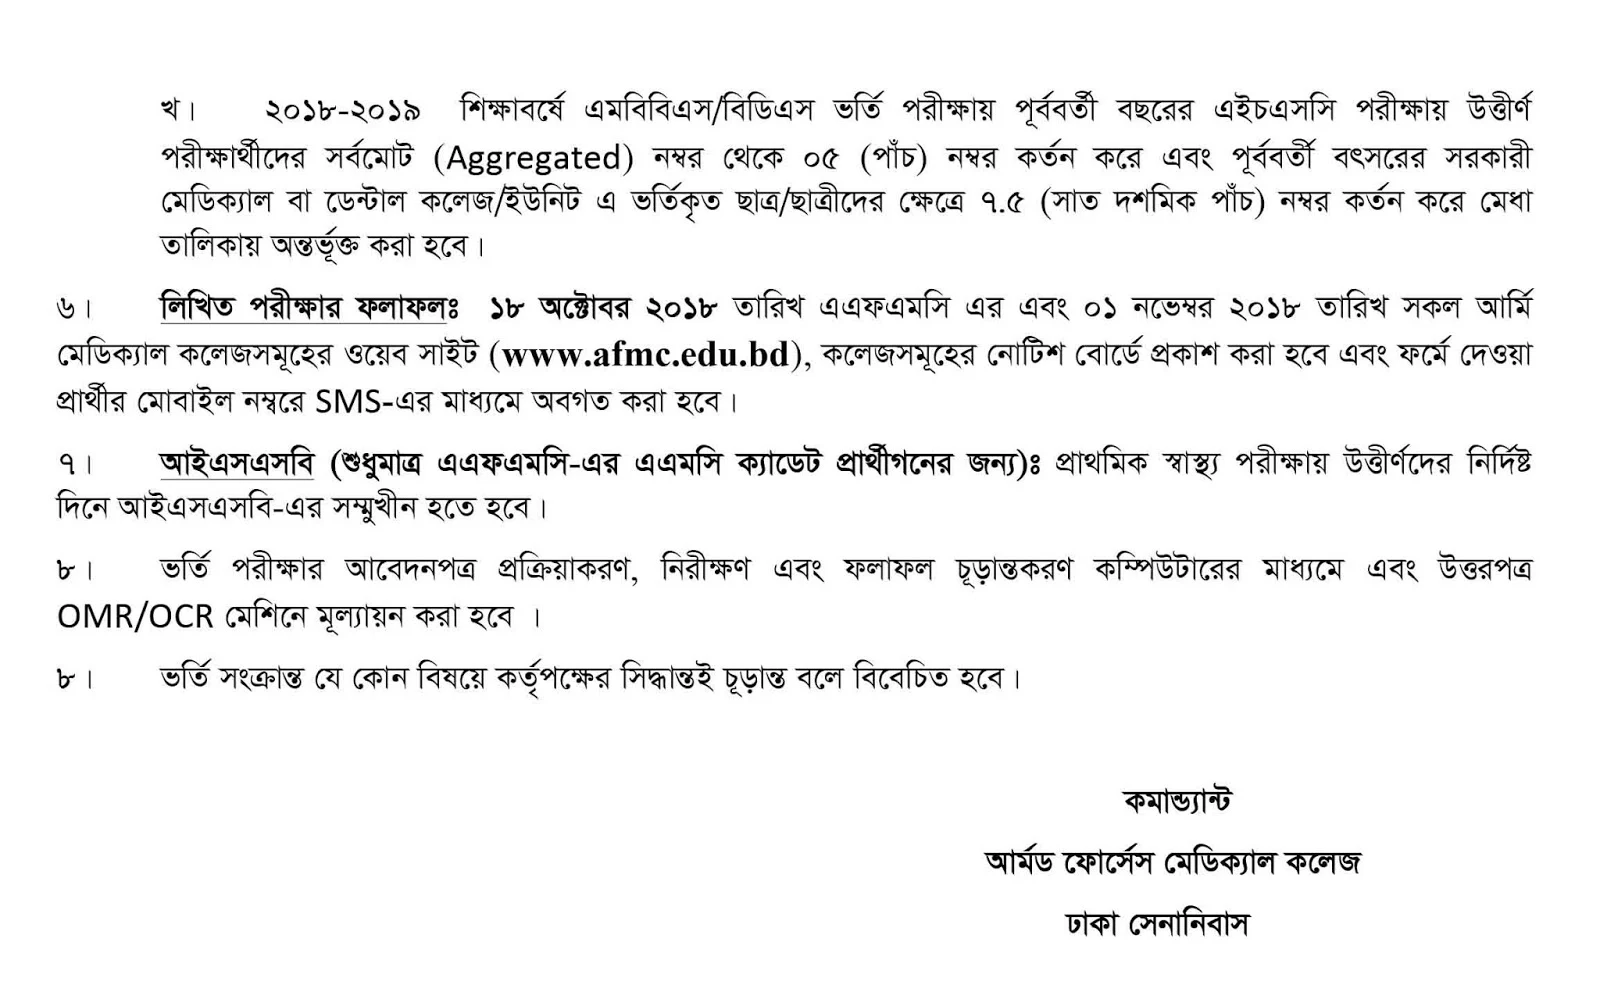 Bangladesh Armed Forces Medical College (AFMC) Admission Circular 2018-2019